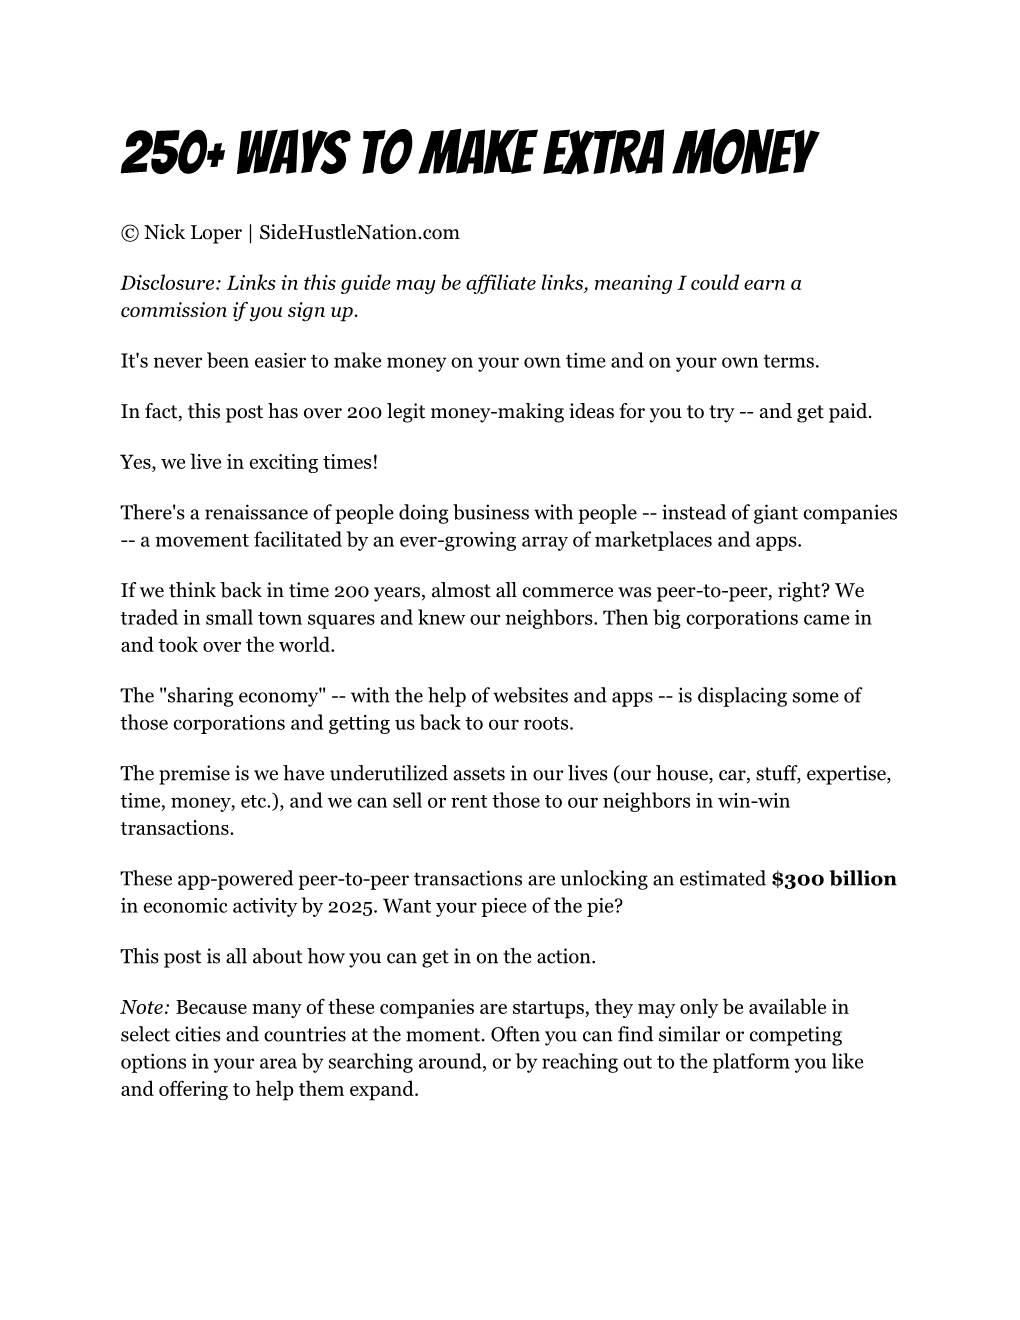 250+ Ways to Make Extra Money